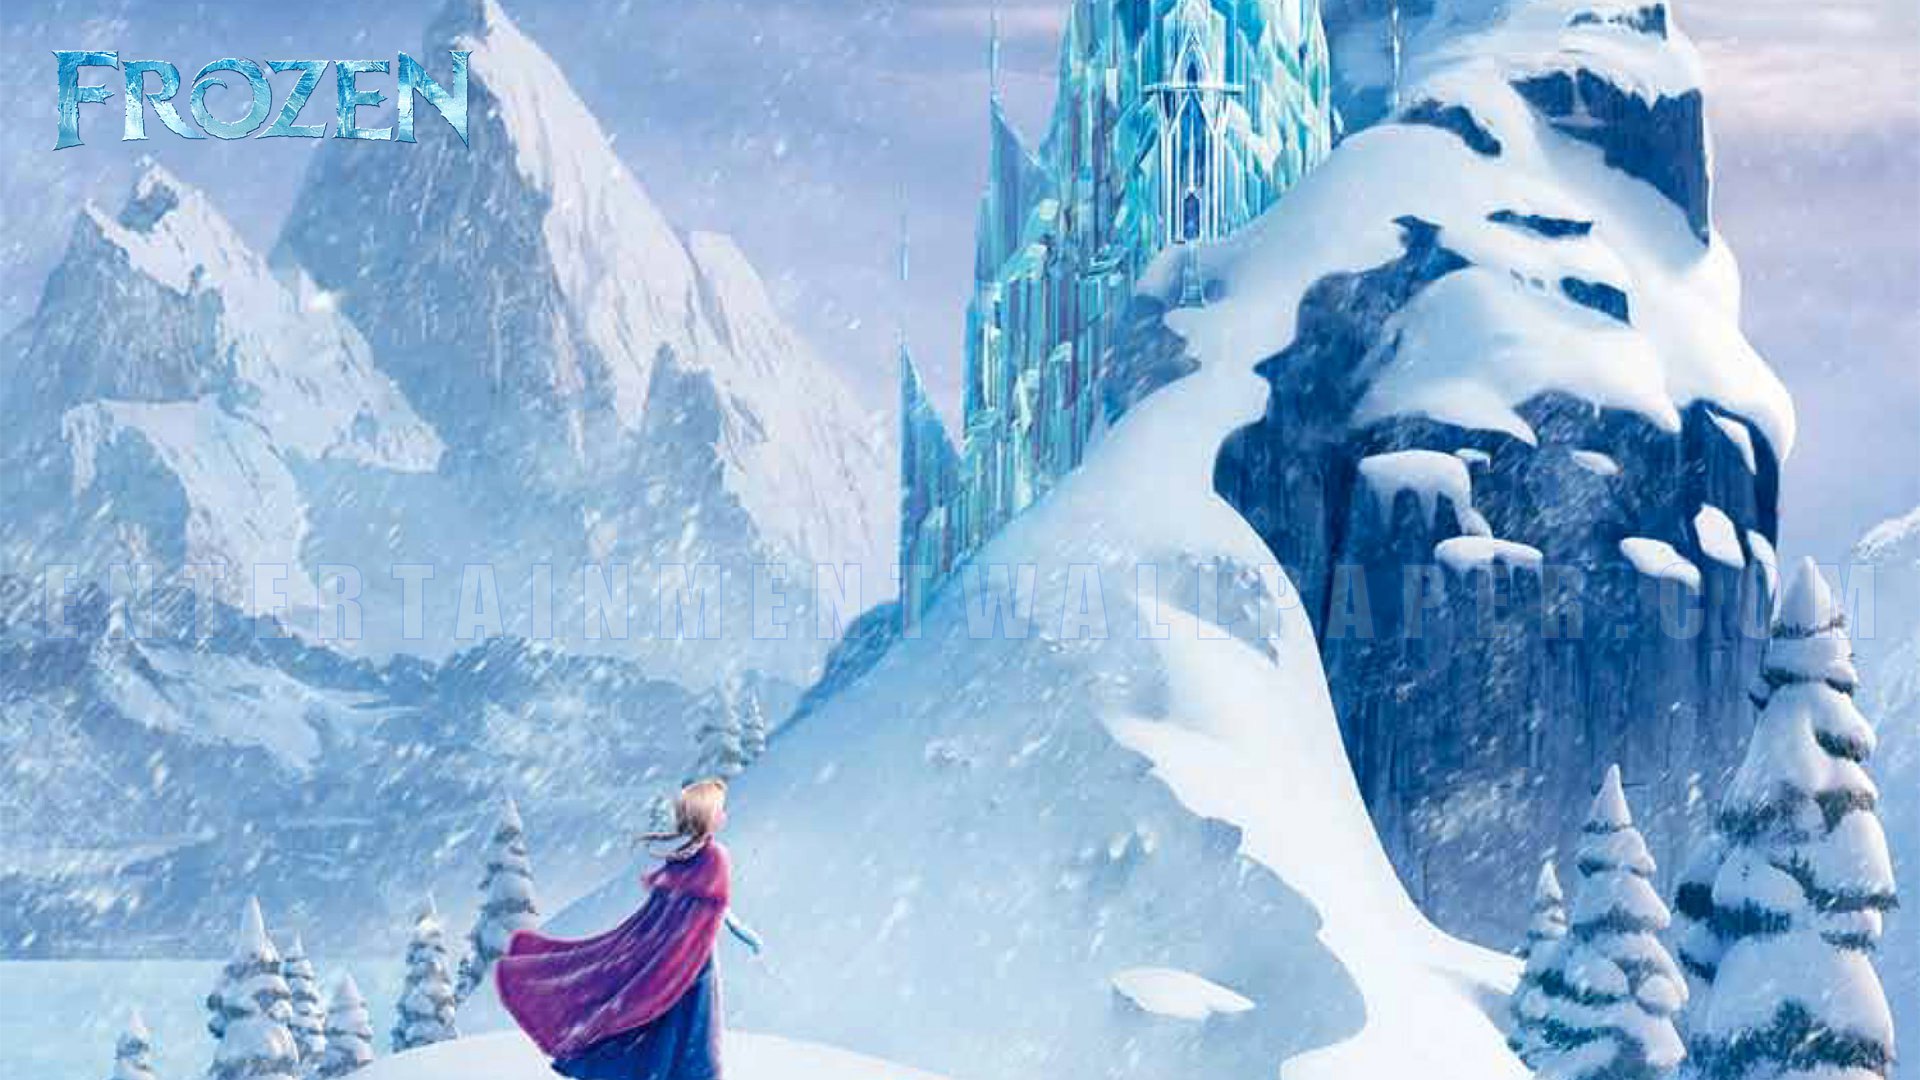 Frozen   Disney Frozen Desktop and mobile wallpaper Wallippo